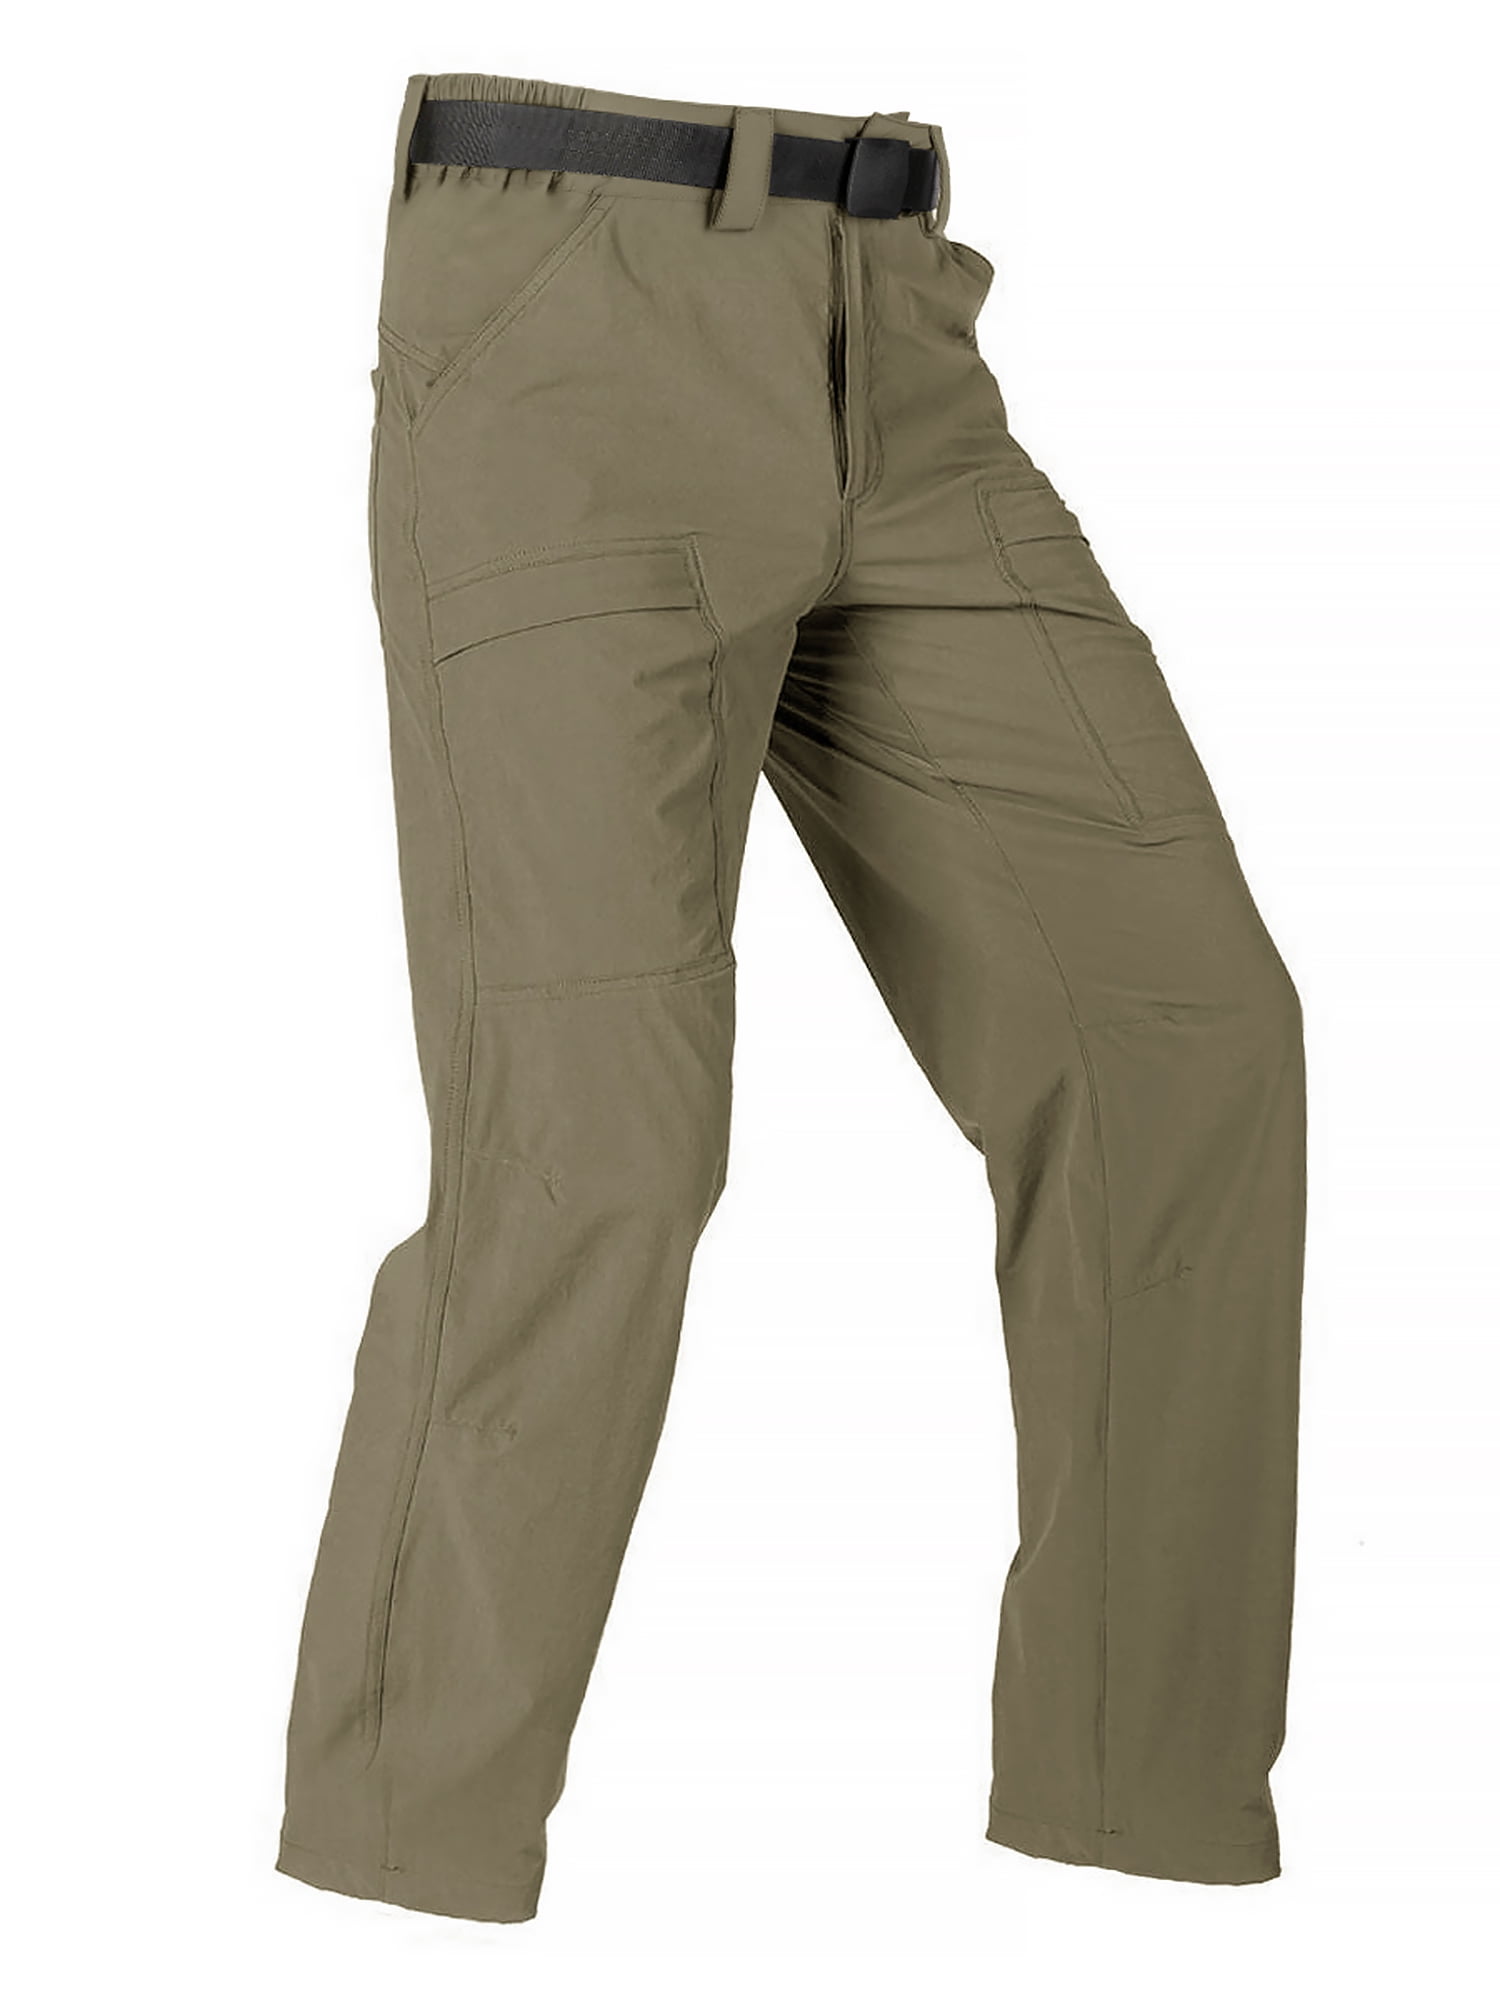 FREE SOLDIER Men's Waterproof Lightweight Hiking Pants Quick Dry